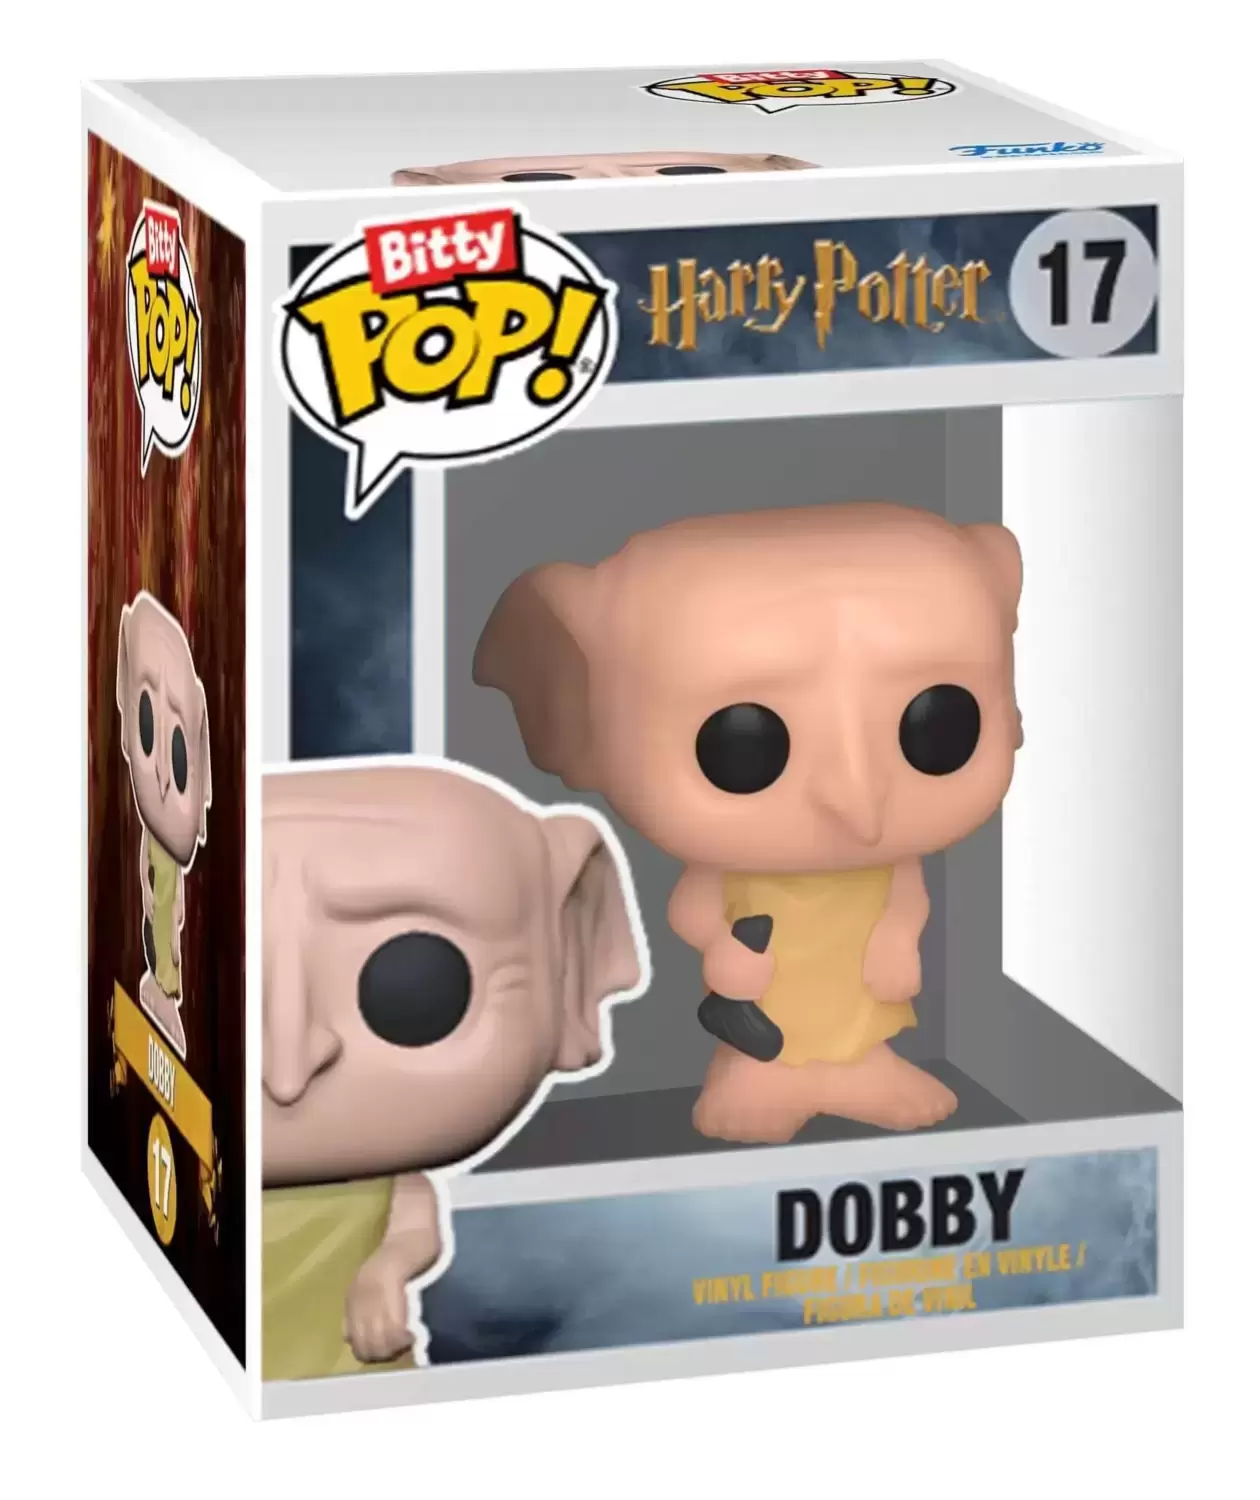 Monkey Depot - Funko Bitty Pop: Harry Potter Series Dobby (17)